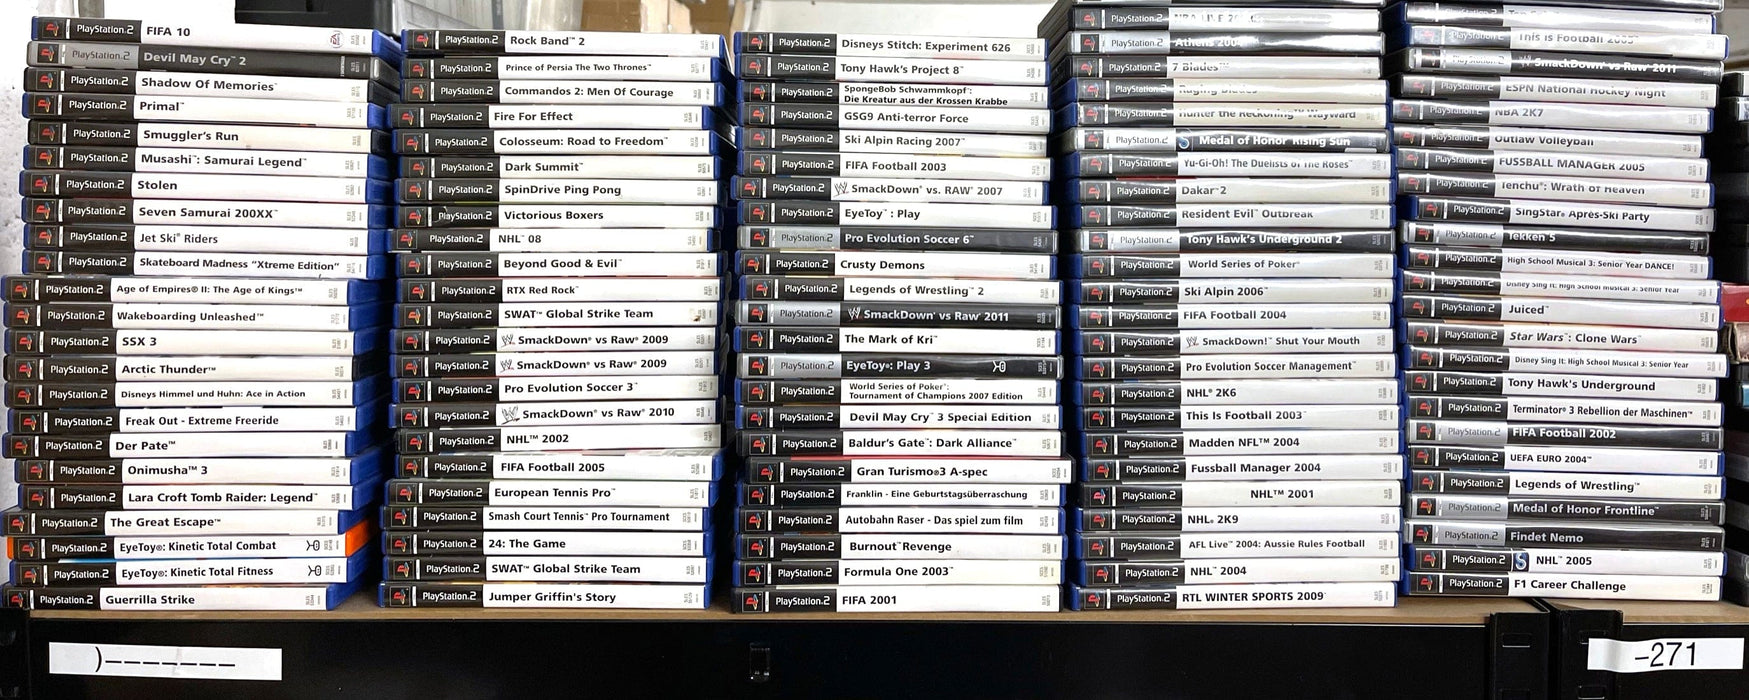 Glaciergames PlayStation 2 Game FIFA 10 PlayStation 2 (Nr.1255)